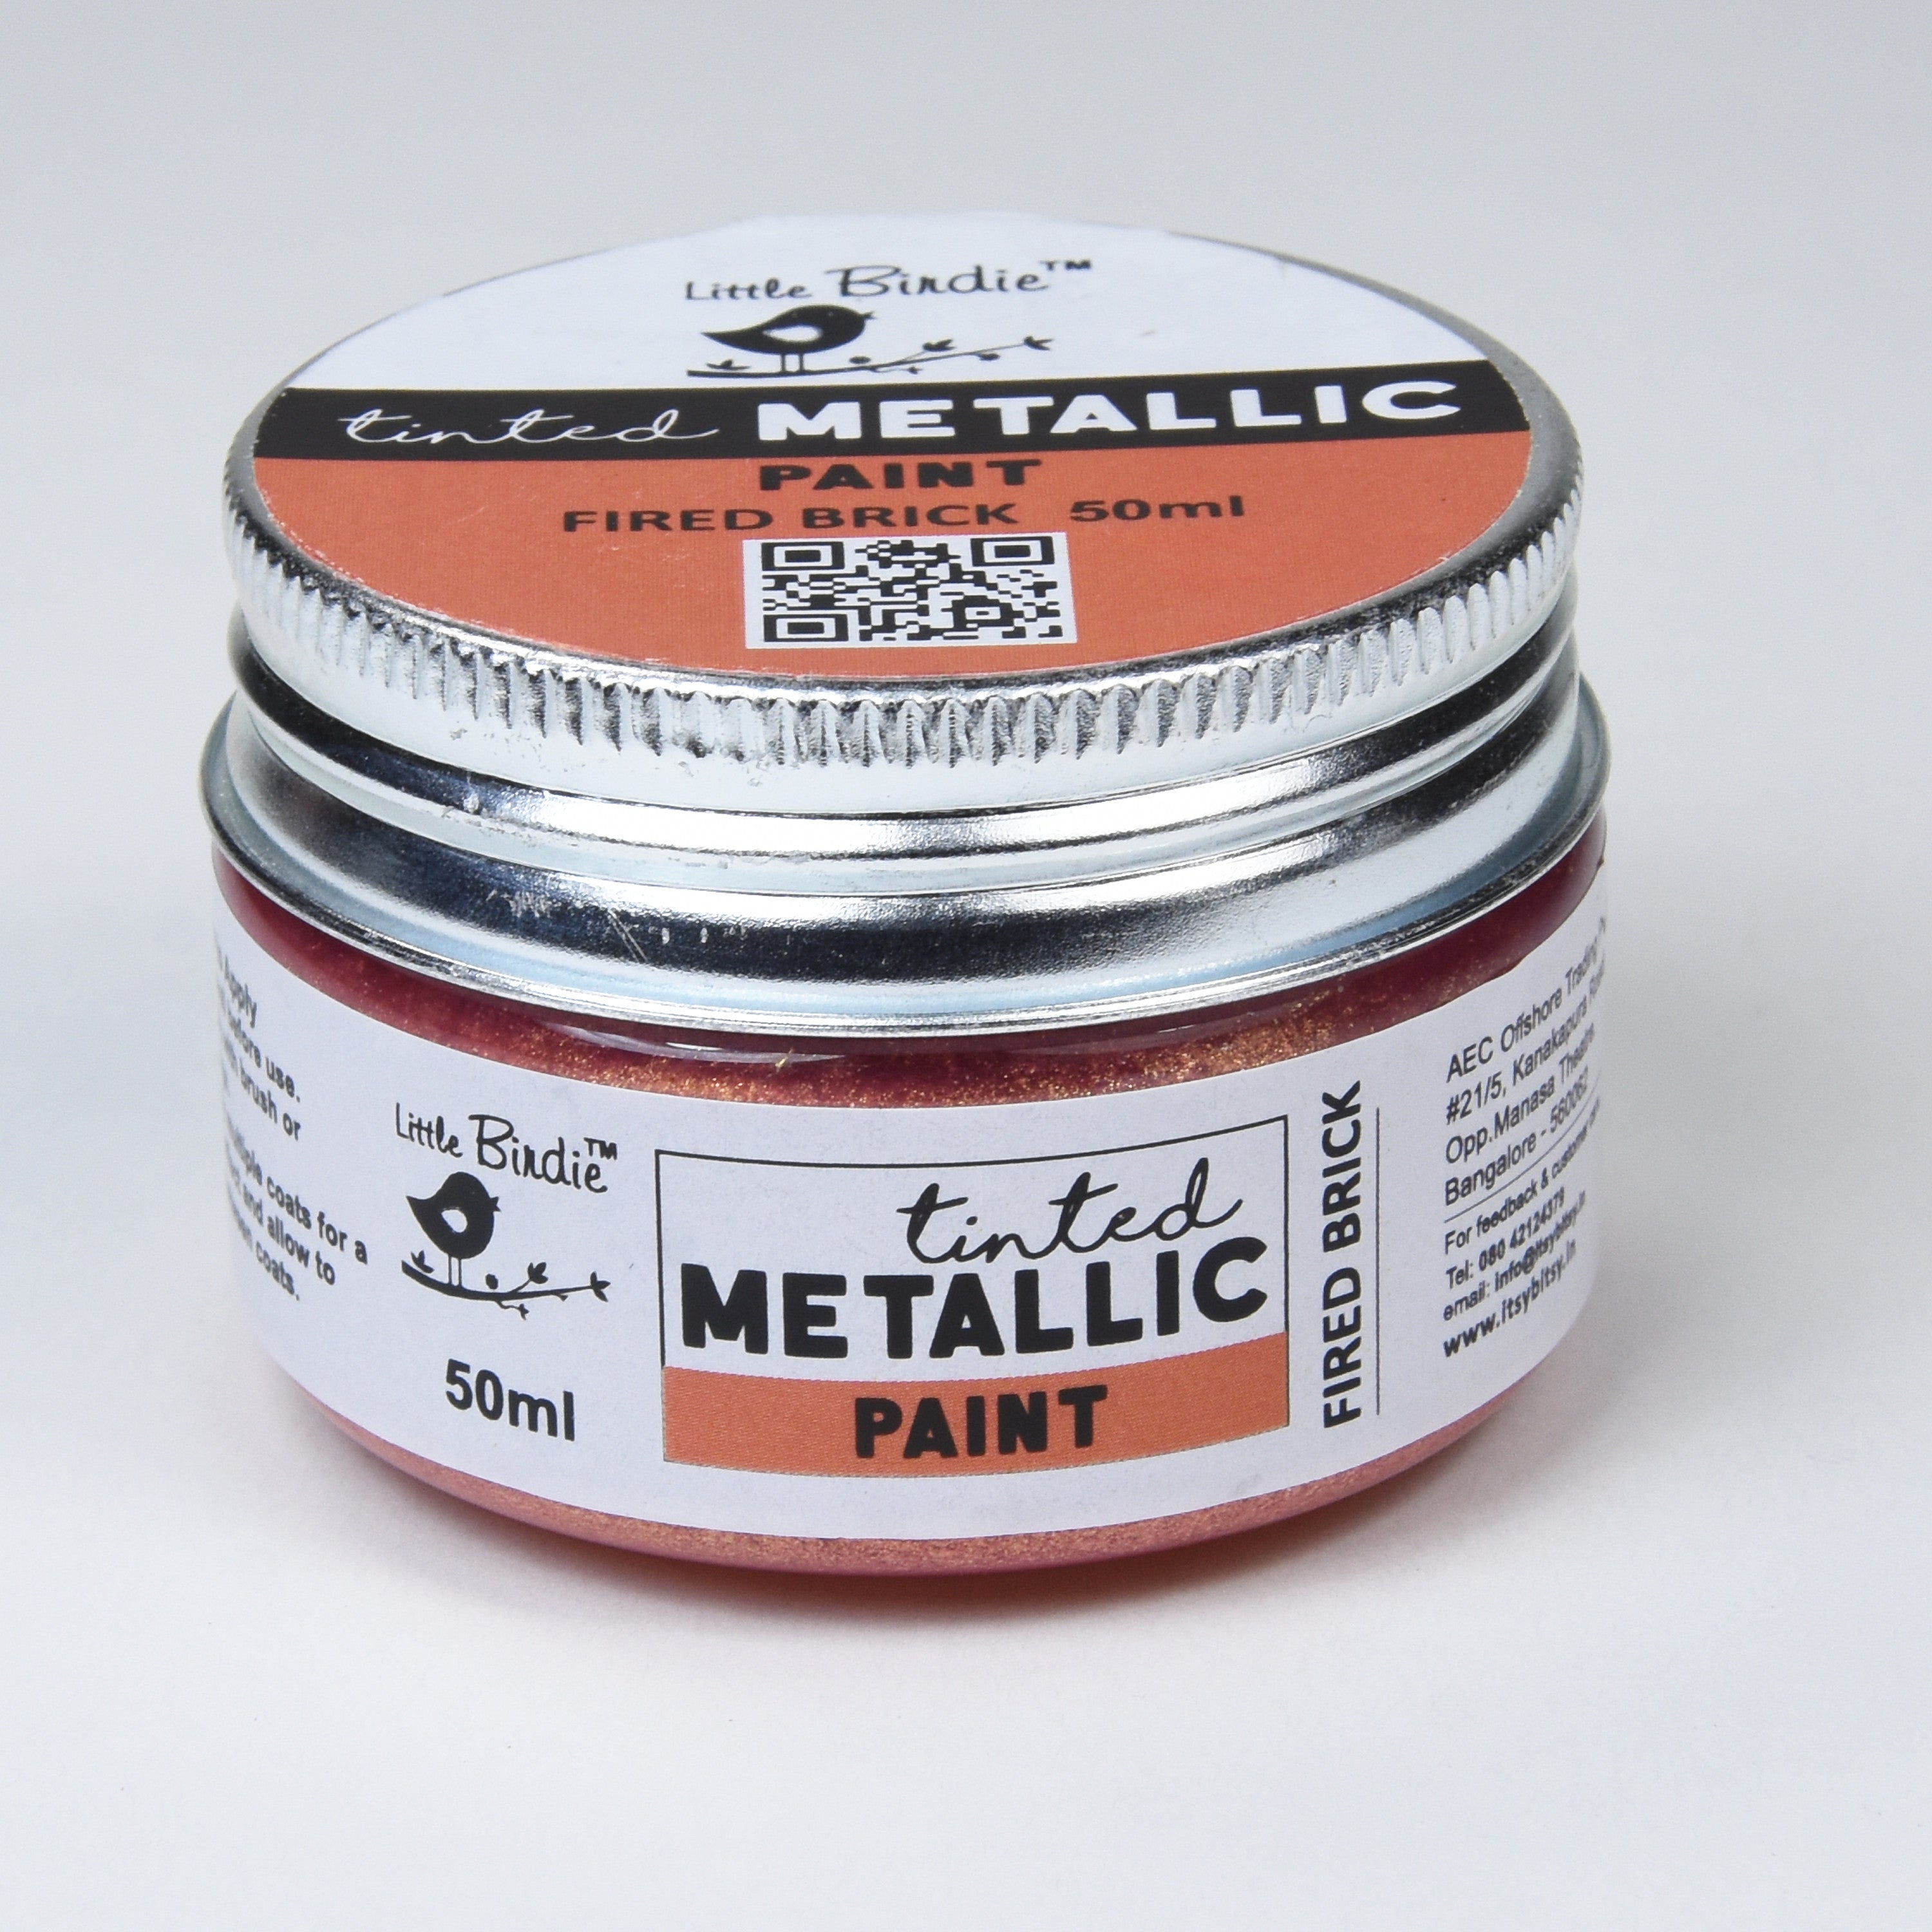 Tinted Metallic Paint Fired Brick 50Ml Bottle Lb - VC